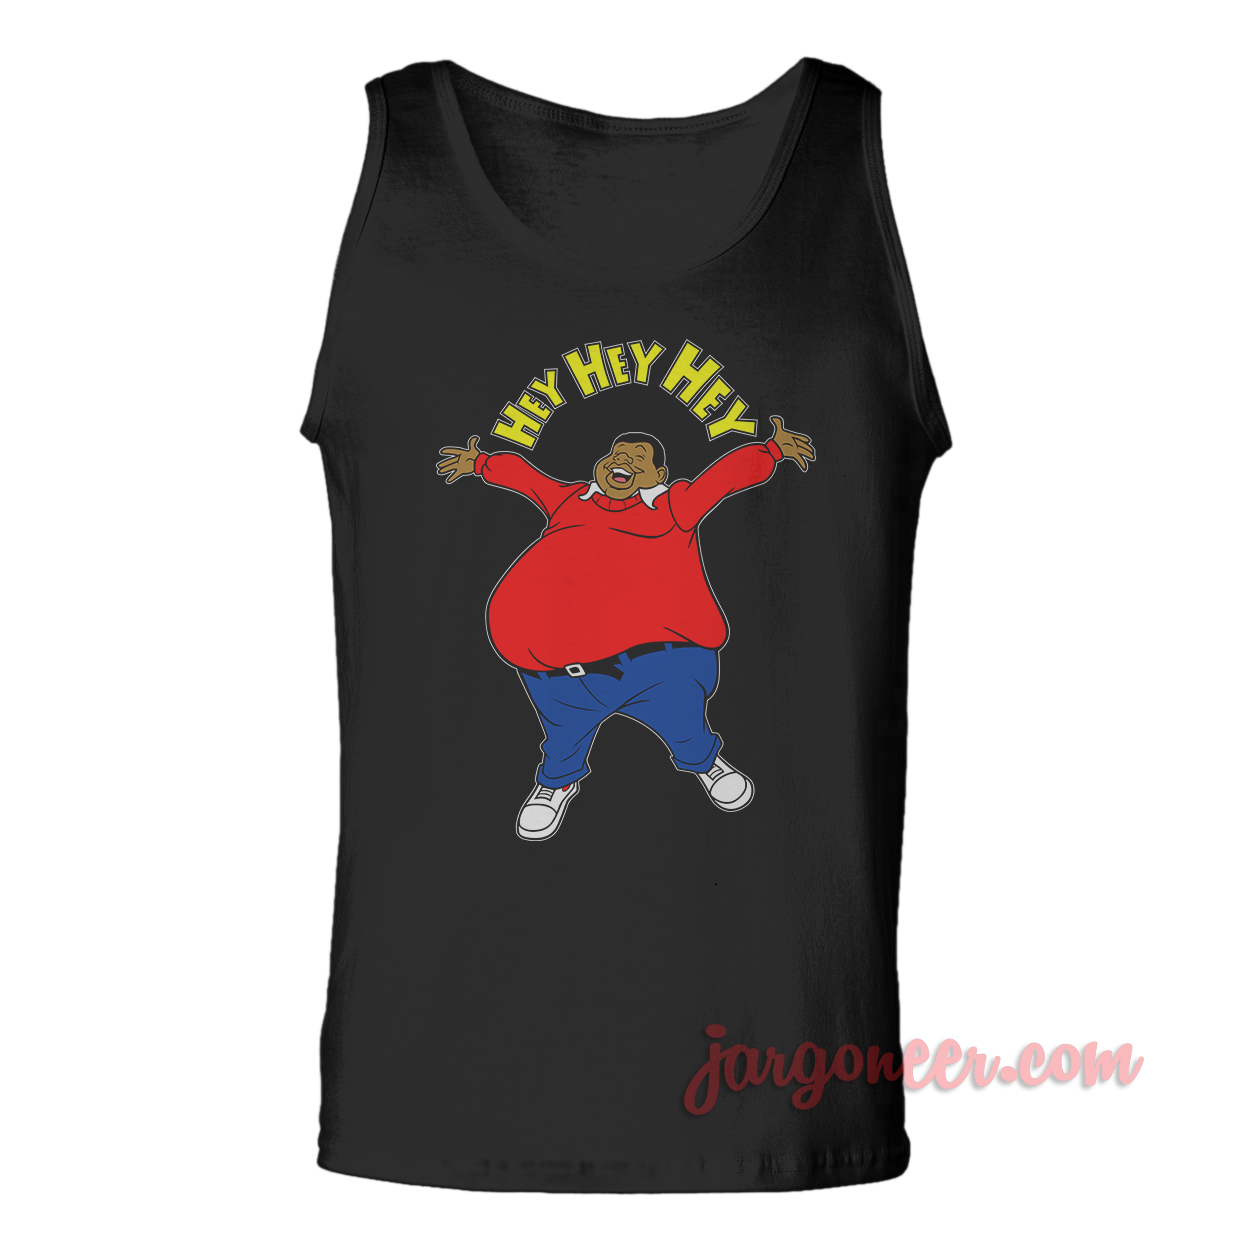 Hey Hey Hey Fatso Black TTM - Shop Unique Graphic Cool Shirt Designs